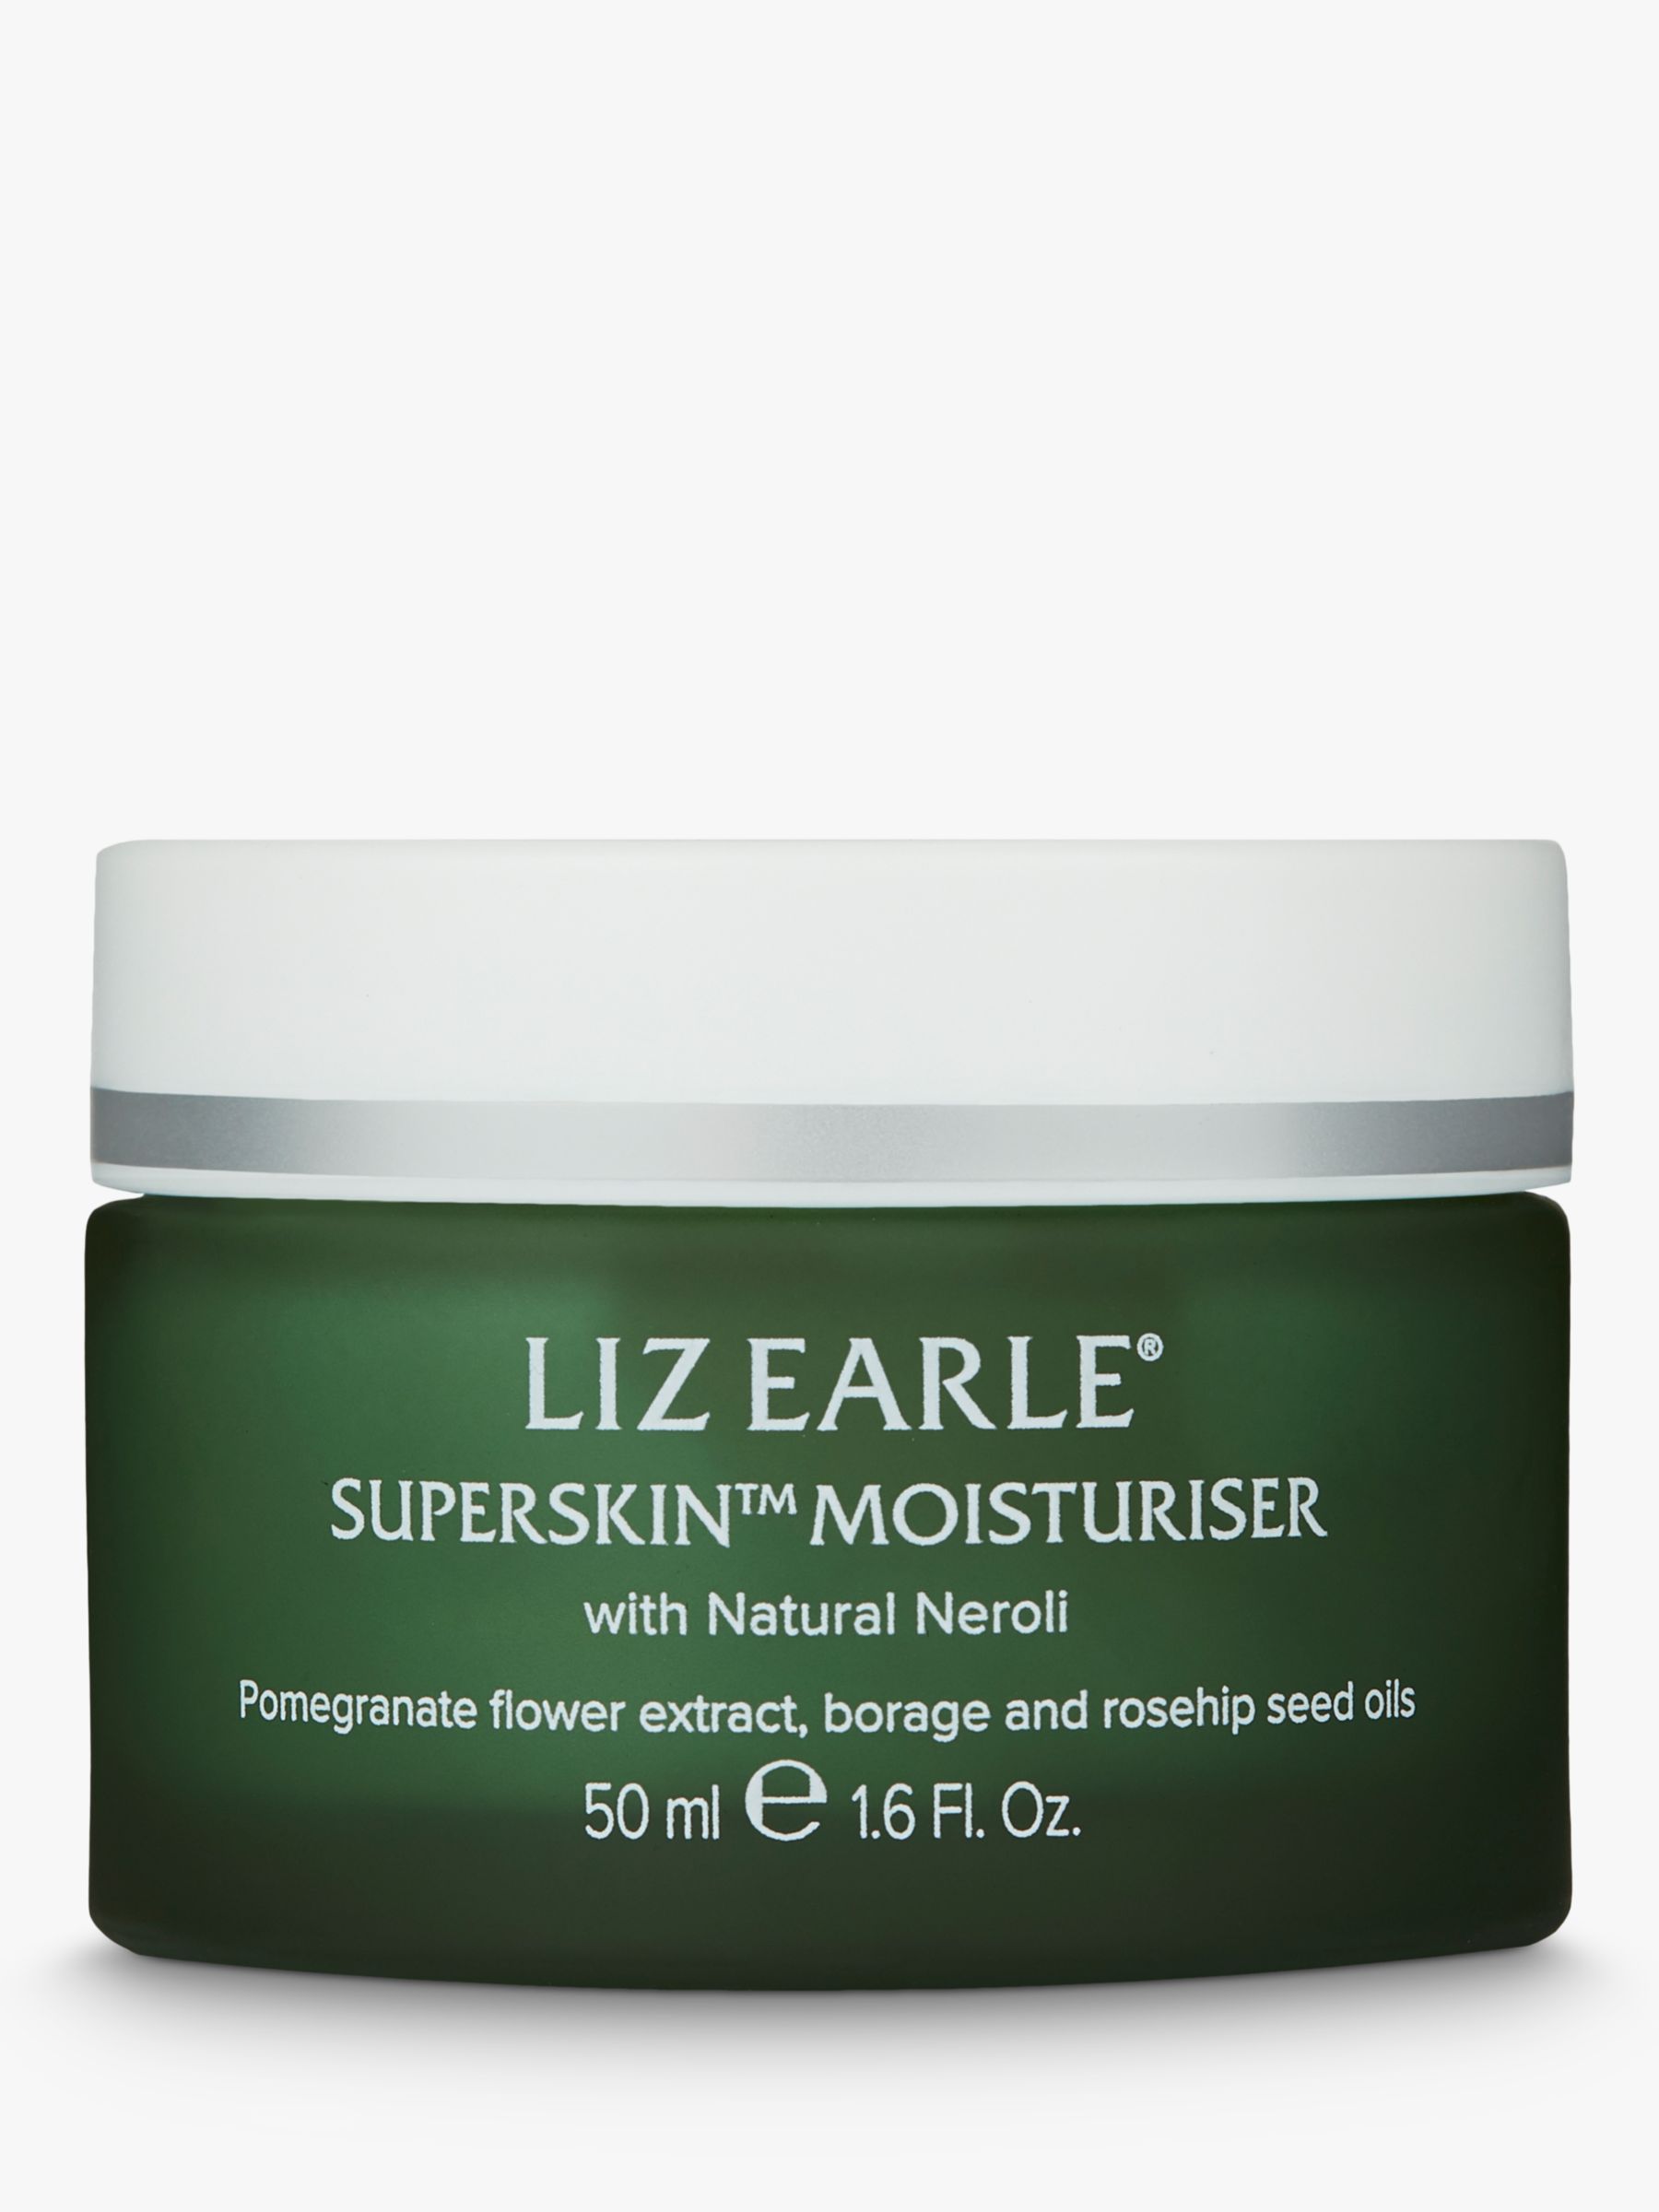 Liz Earle Superskin™ Moisturiser with Natural Neroli Scent, 50ml